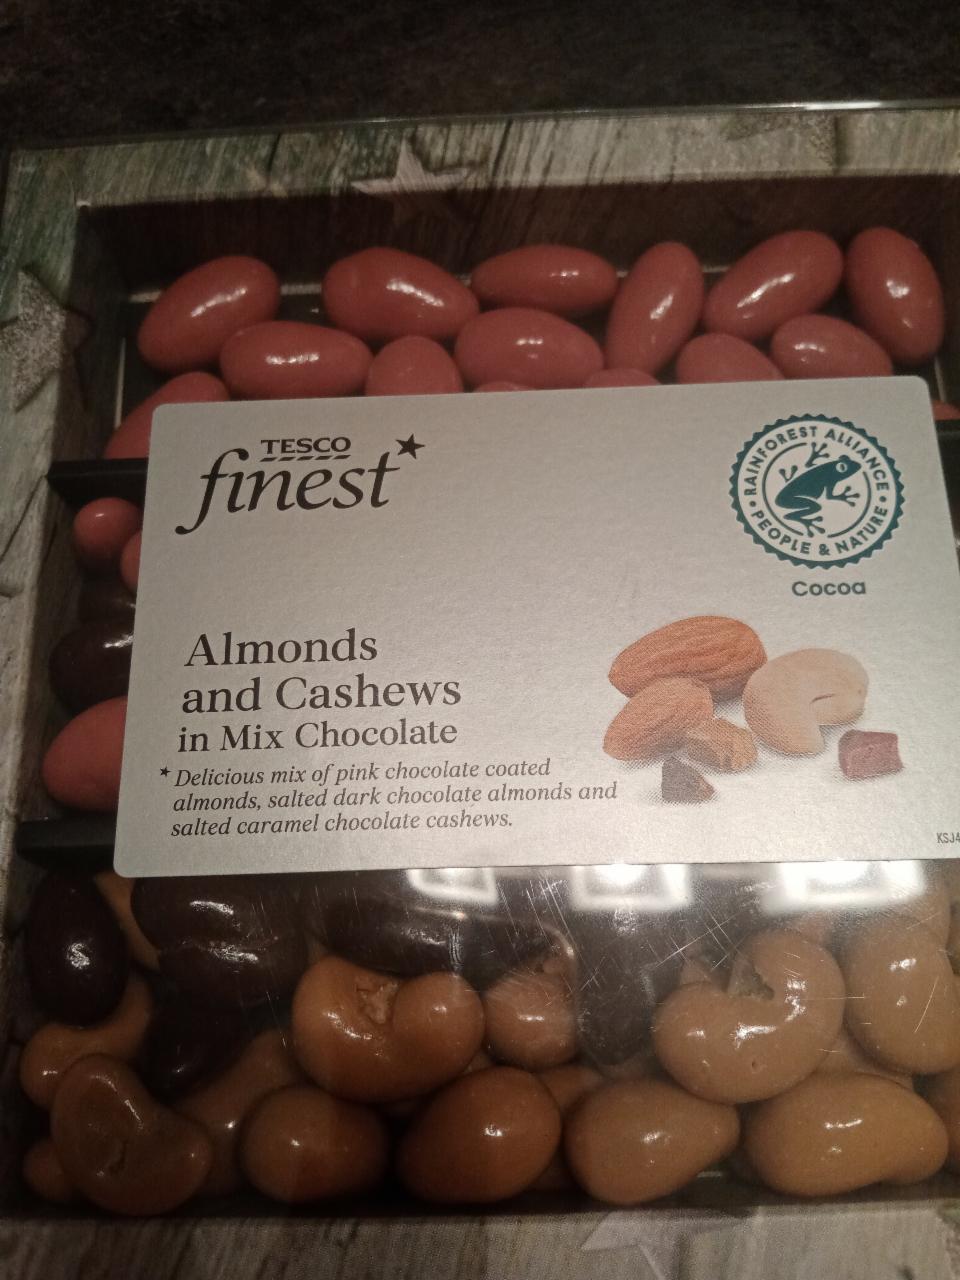 Fotografie - Almonds and cashews in Mix chocolate Tesco finest